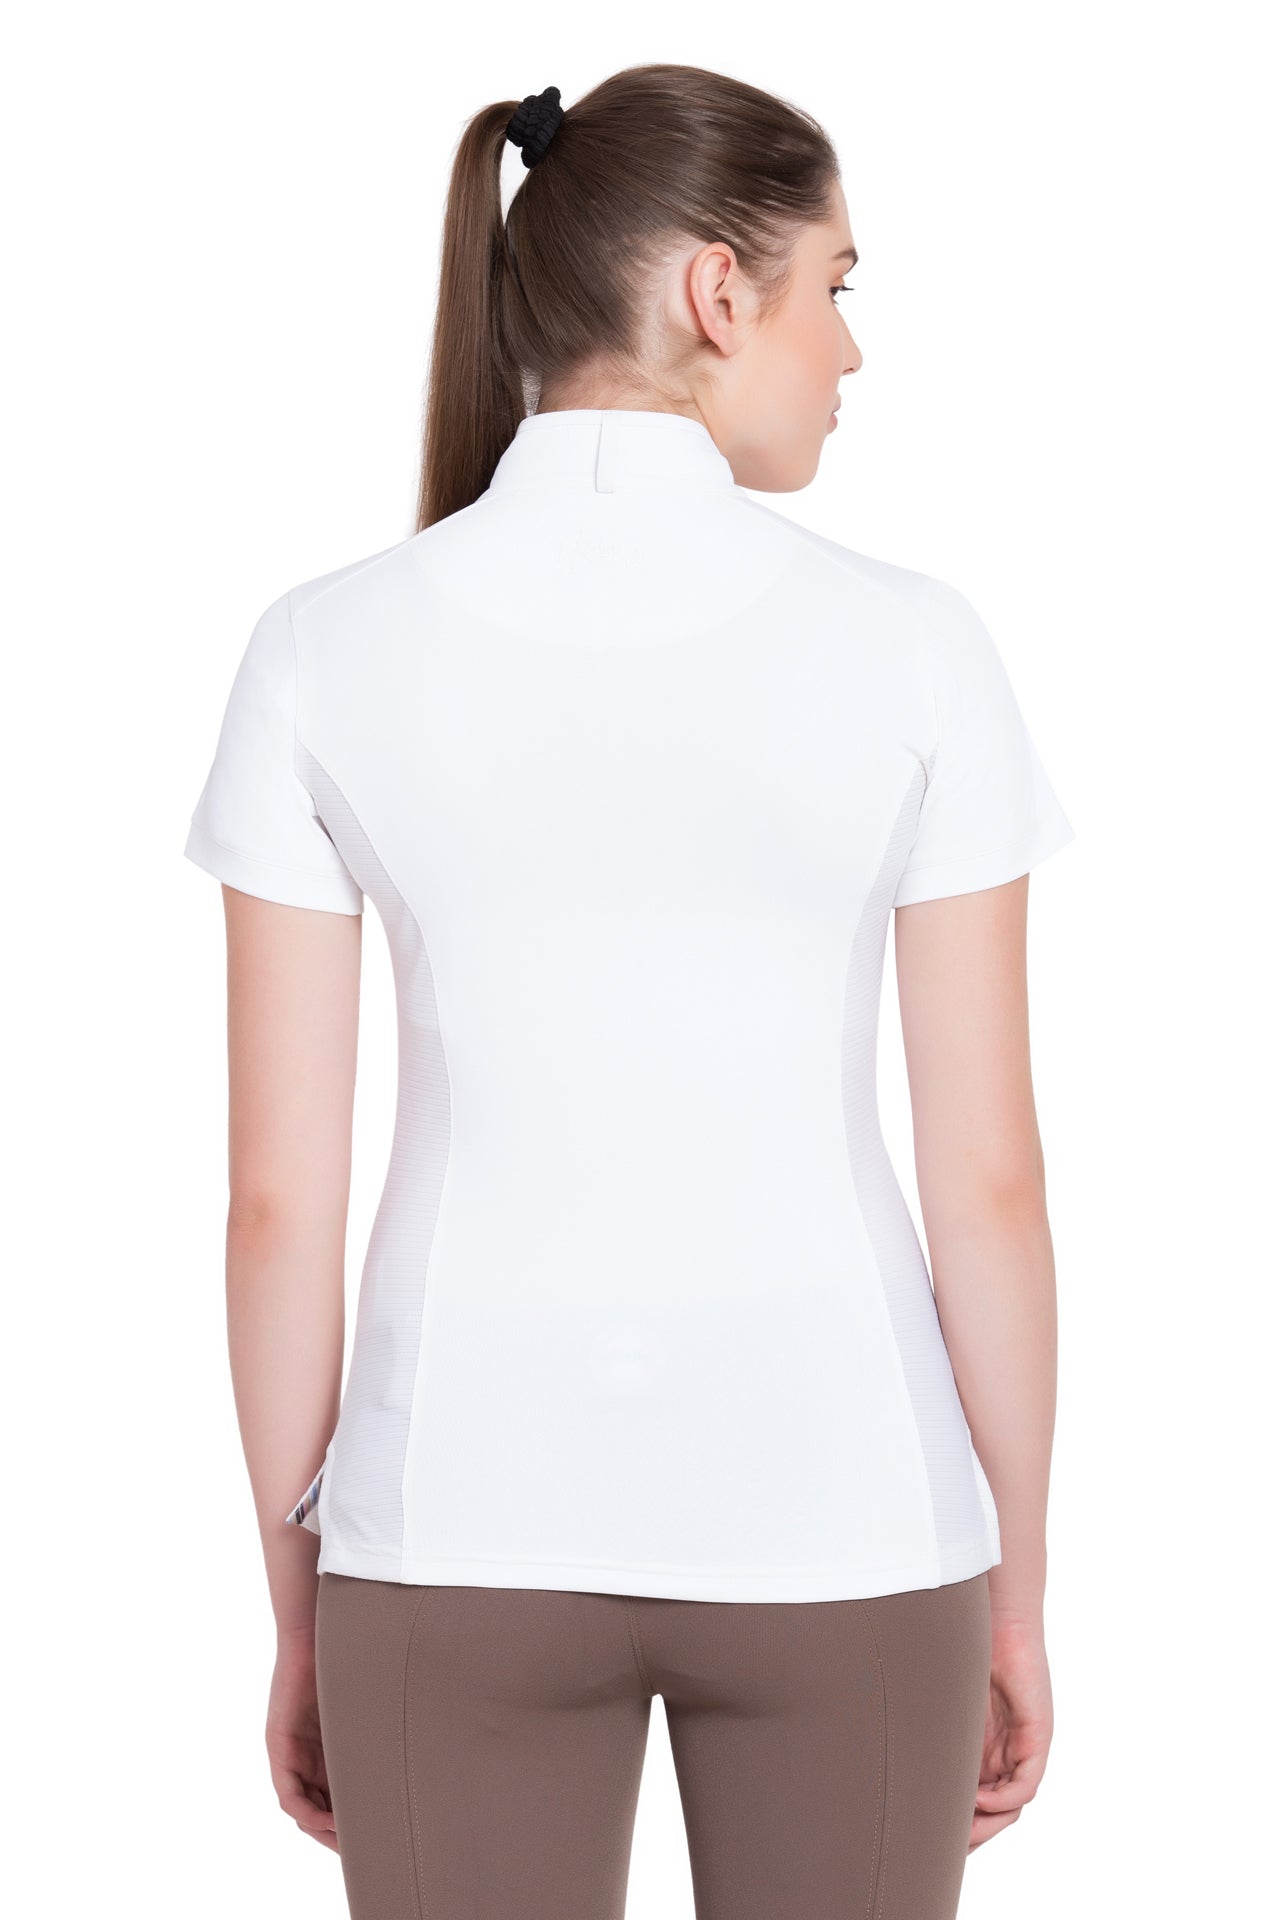 Equine Couture Ladies Cara Short Sleeve Show Shirt - Breeches.com